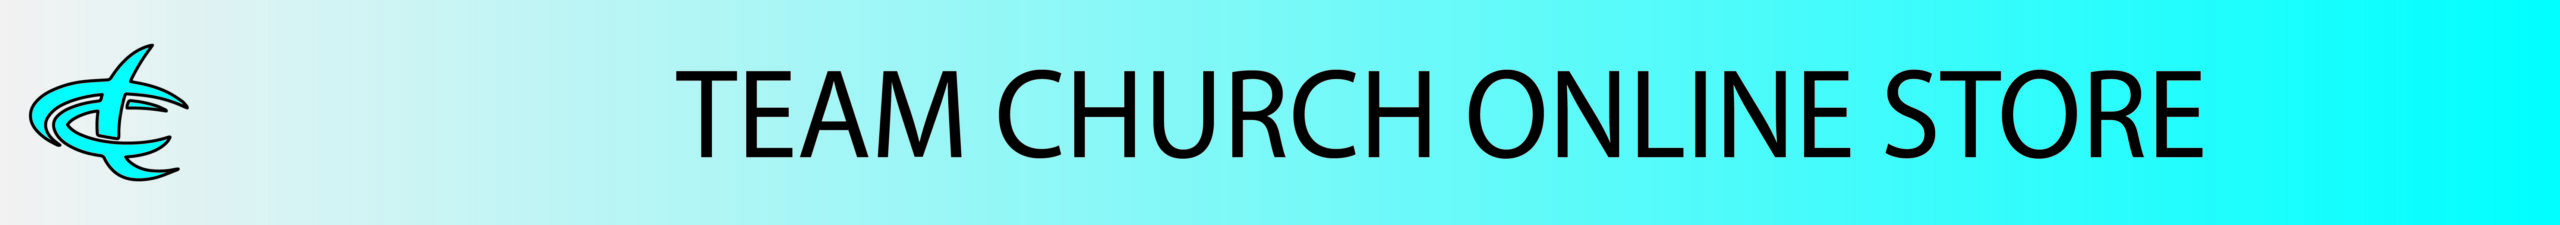 Team Church Online Store